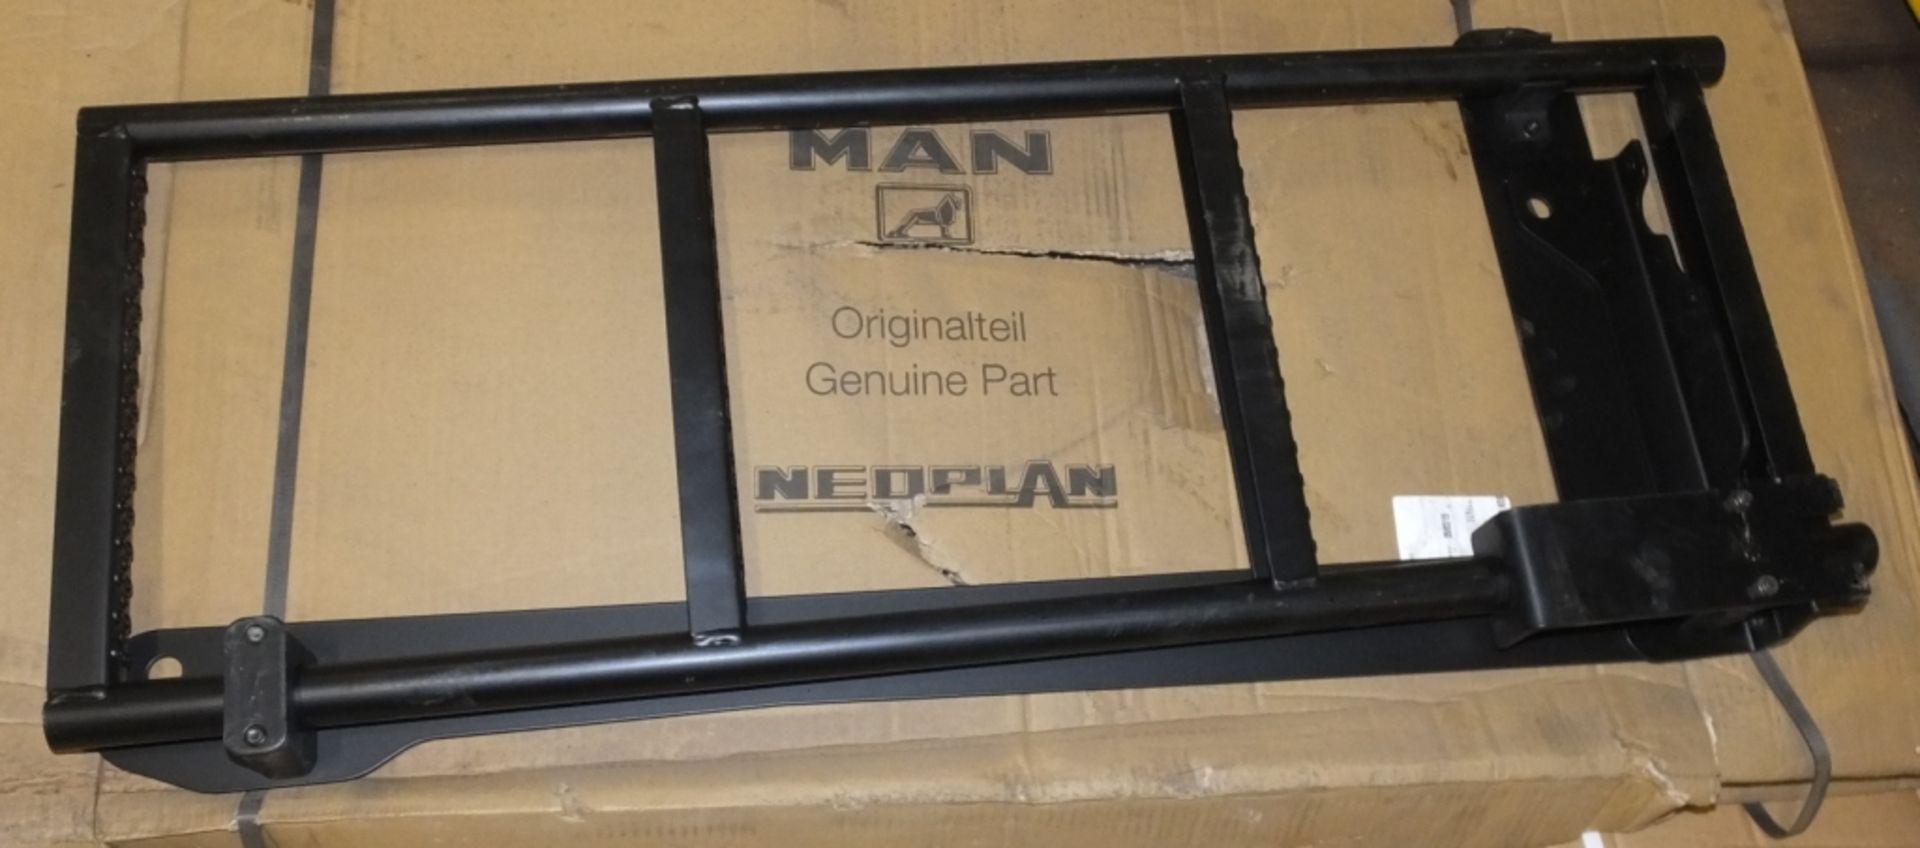 6x Neoplan Man Vehicle Boarding Ladders - PN 82-61511-6003 - Image 2 of 3